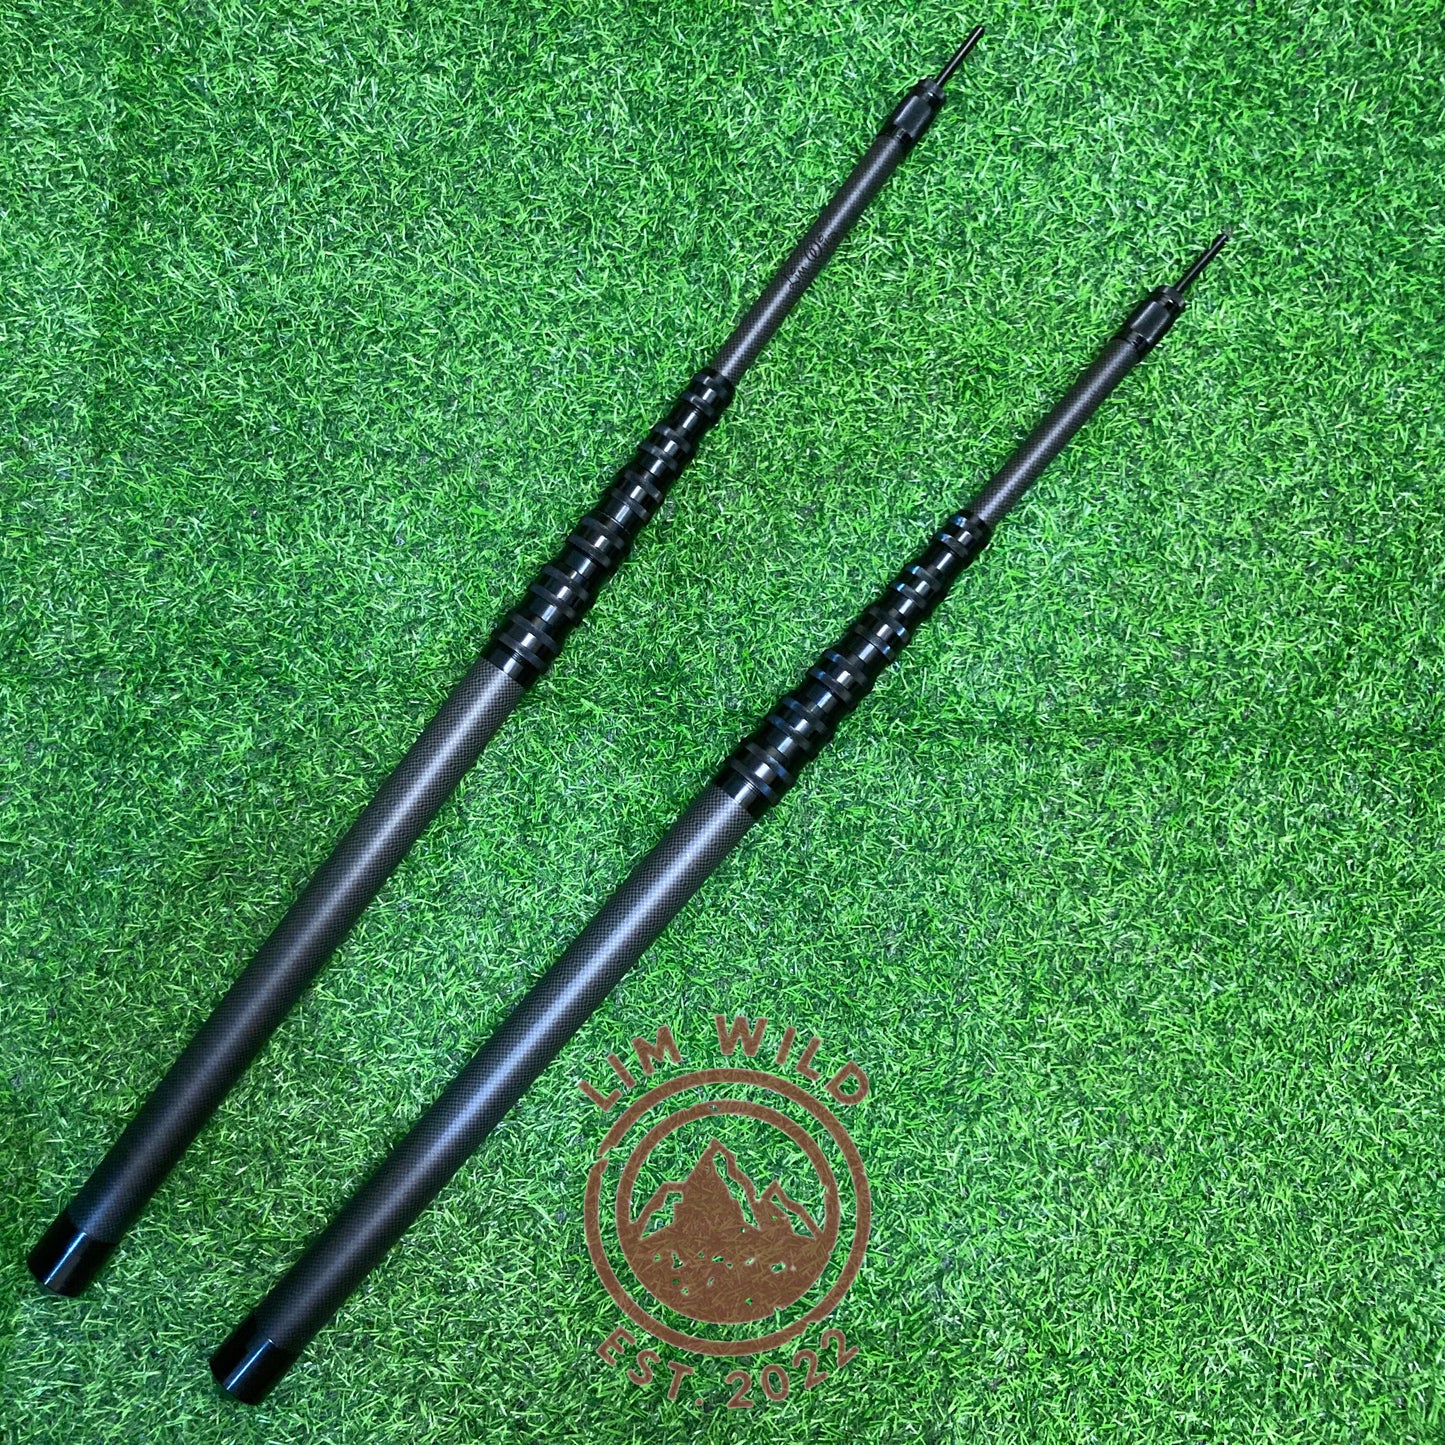 Ultra-light telescopic adjustable carbon fiber canopy pole tip 2.1 m 2.4 m 2.7 m Carbon Adjustable Pole